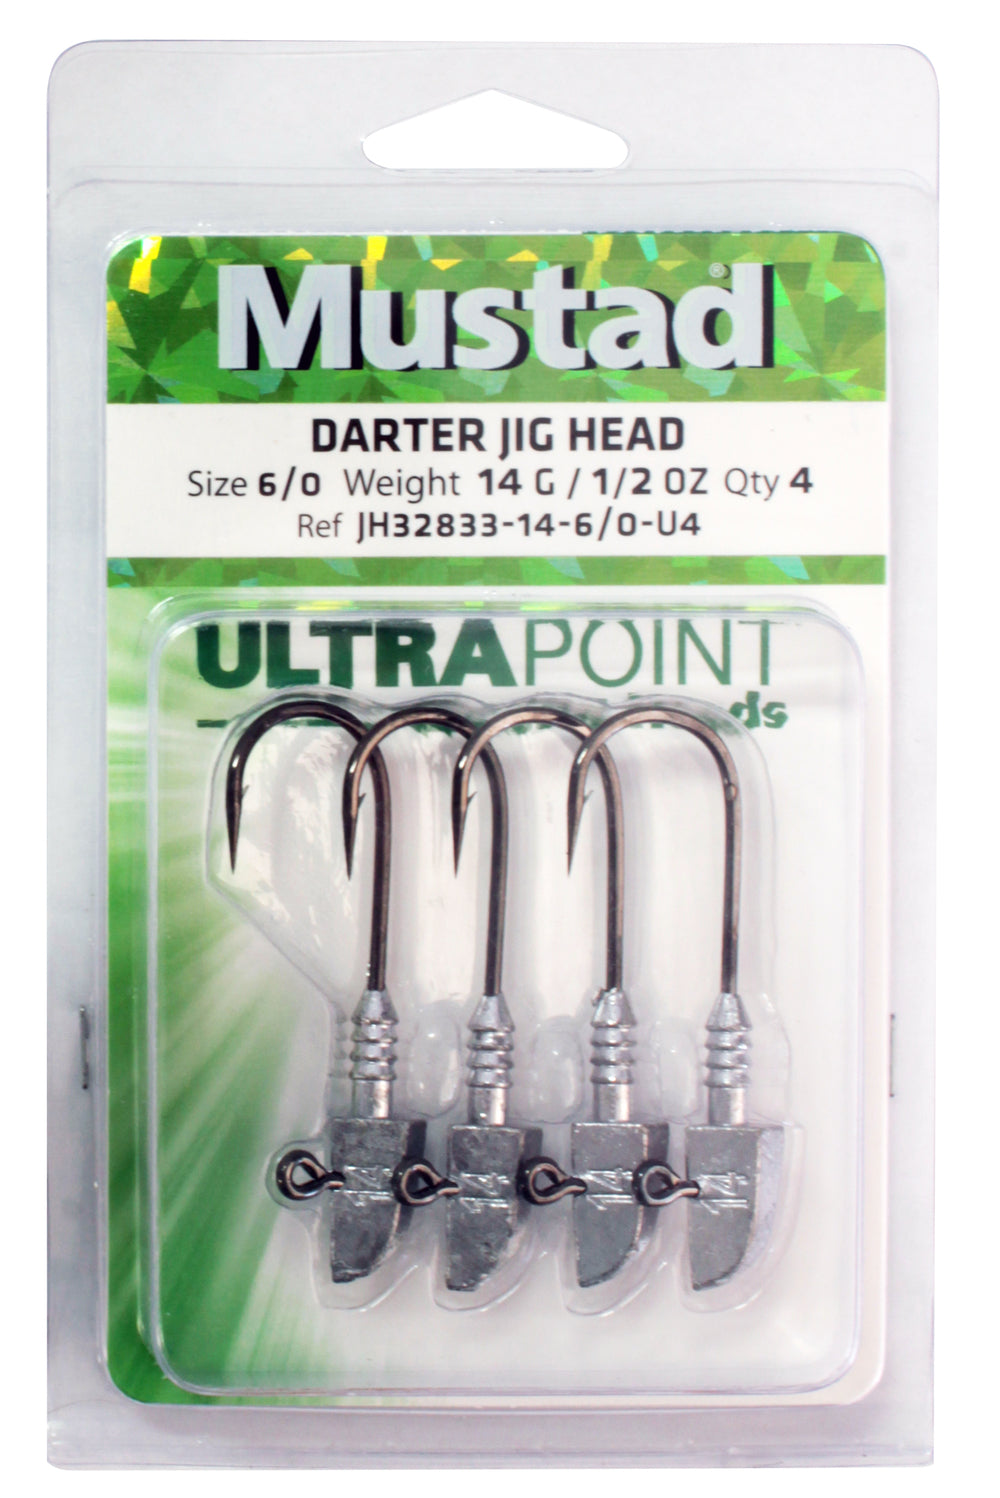 Mustad Darter Jig Head -  - Mansfield Hunting & Fishing - Products to prepare for Corona Virus